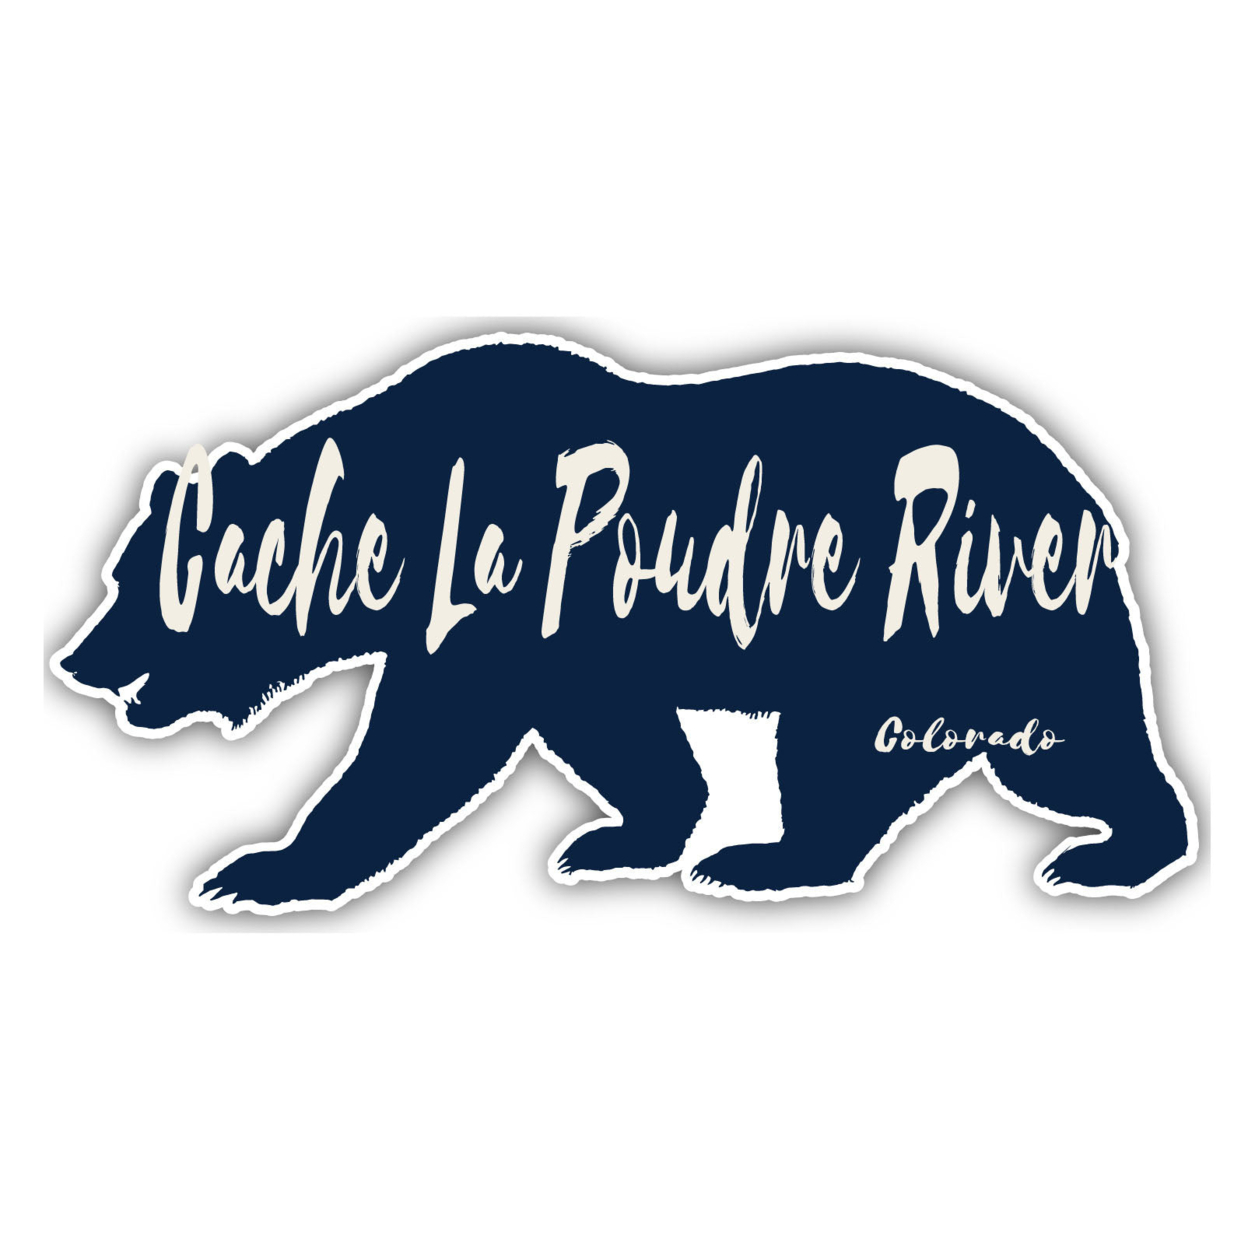 Cache La Poudre River Colorado Souvenir Decorative Stickers (Choose Theme And Size) - Single Unit, 2-Inch, Tent